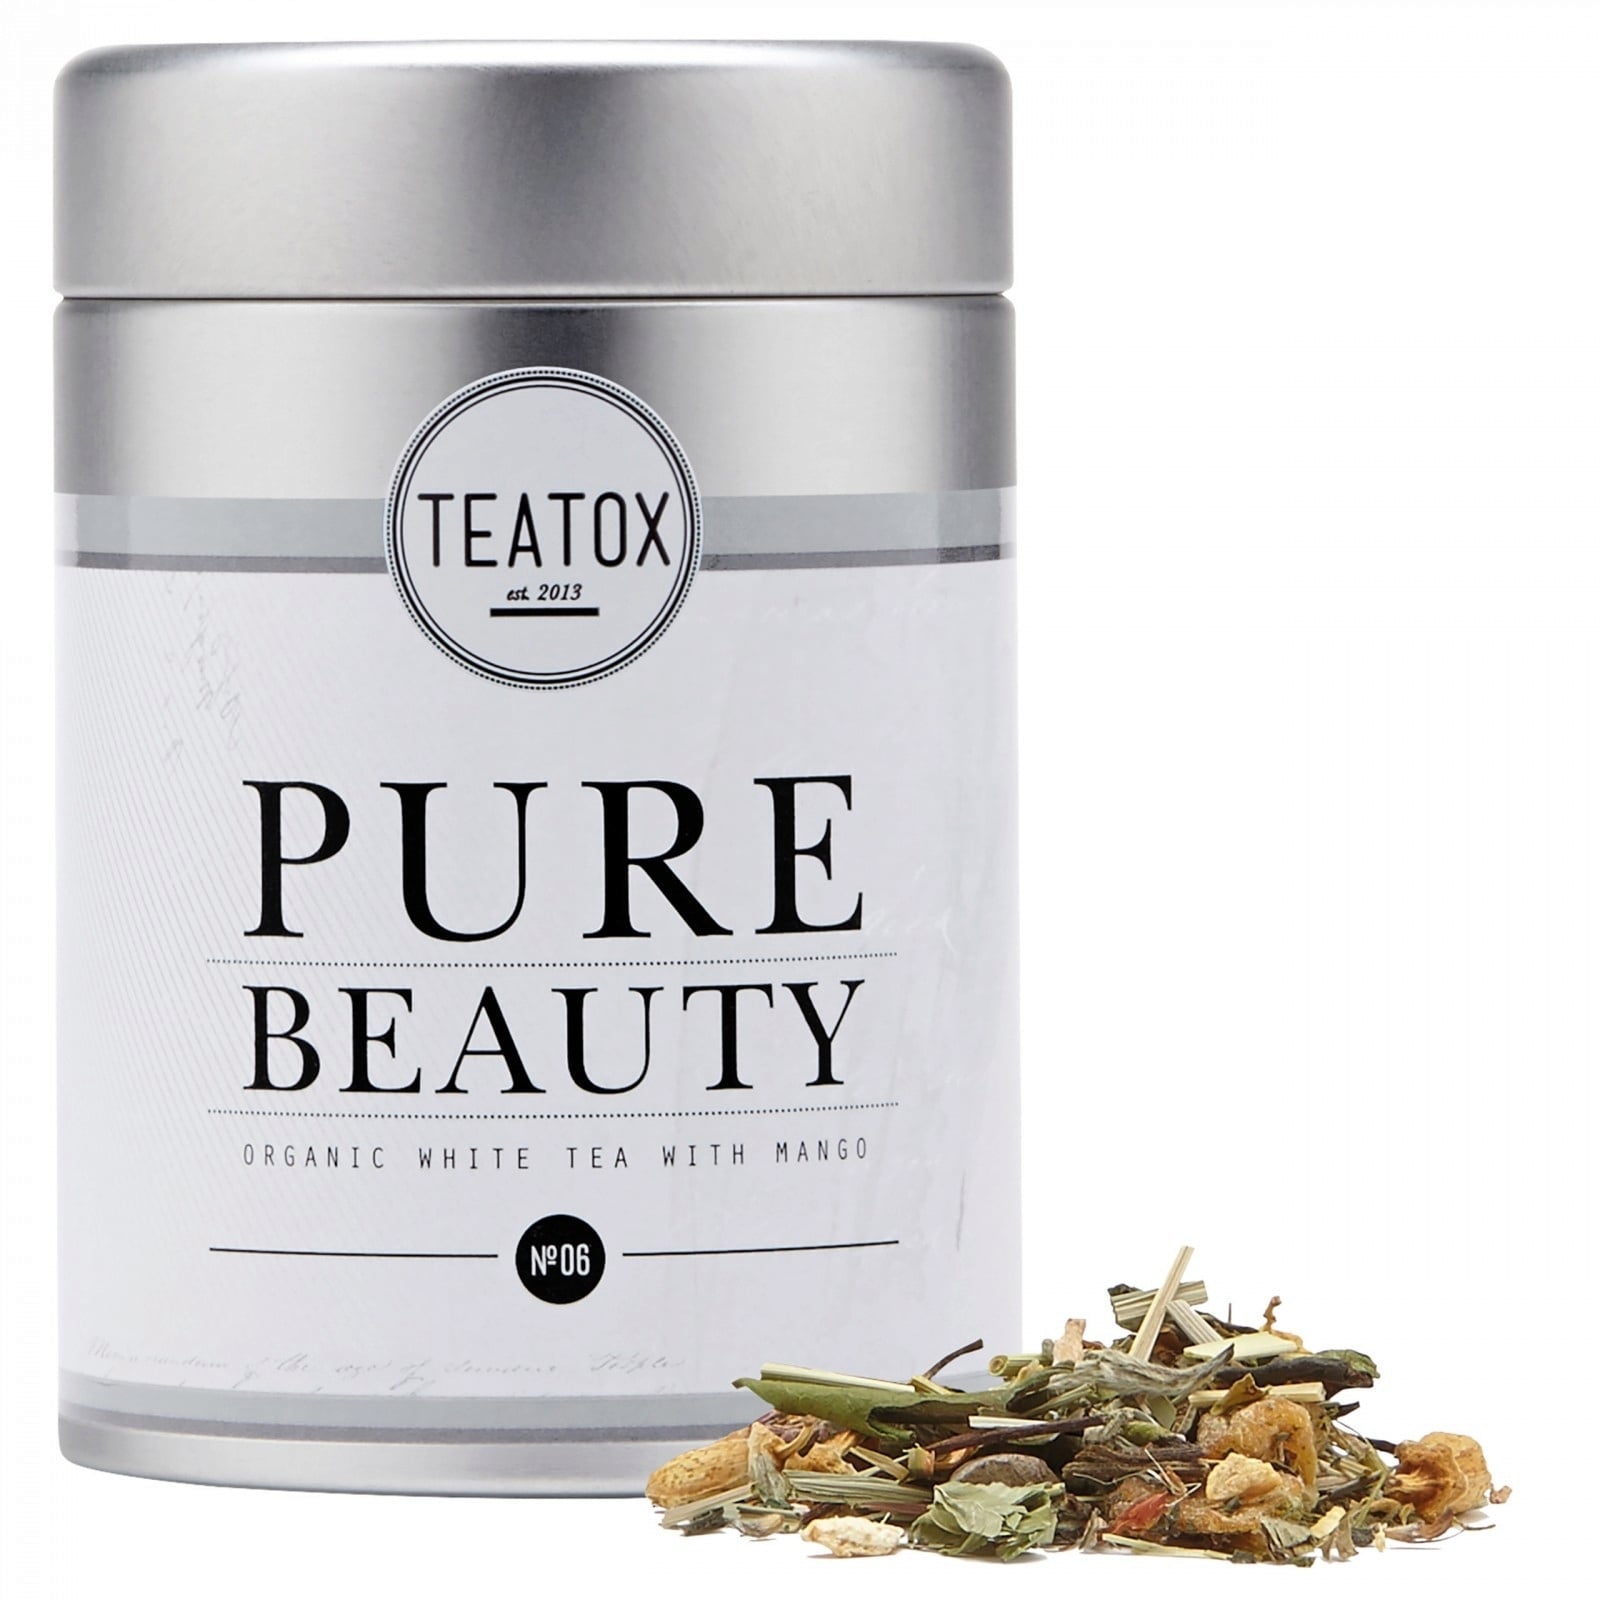 Teatox Pure Beauty - 60 g